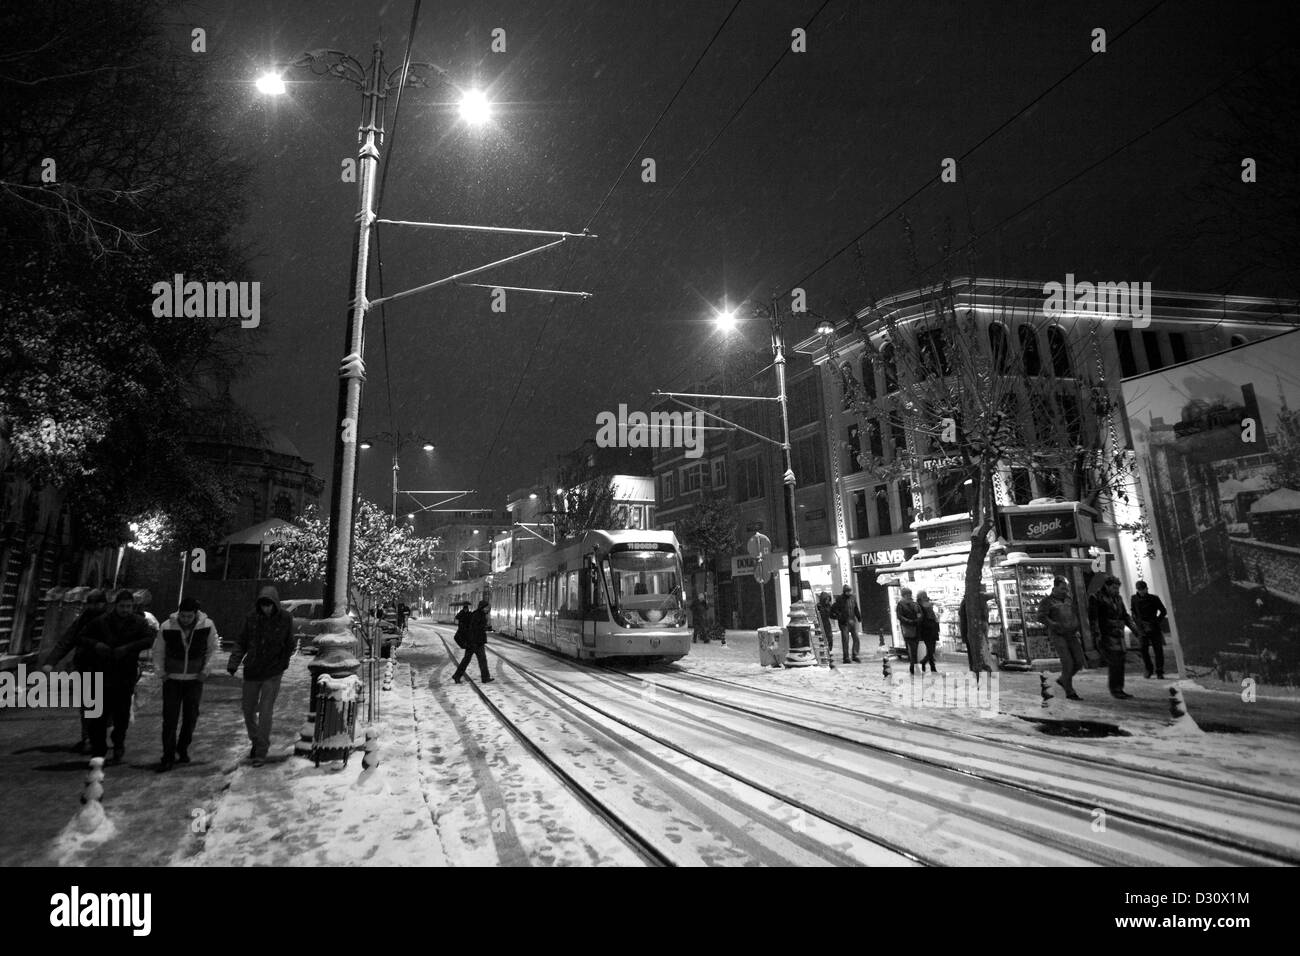 ISTANBUL TURKEY - Winter snowstorm scene in Divanyolu Caddesi, Cemberlitas district Stock Photo